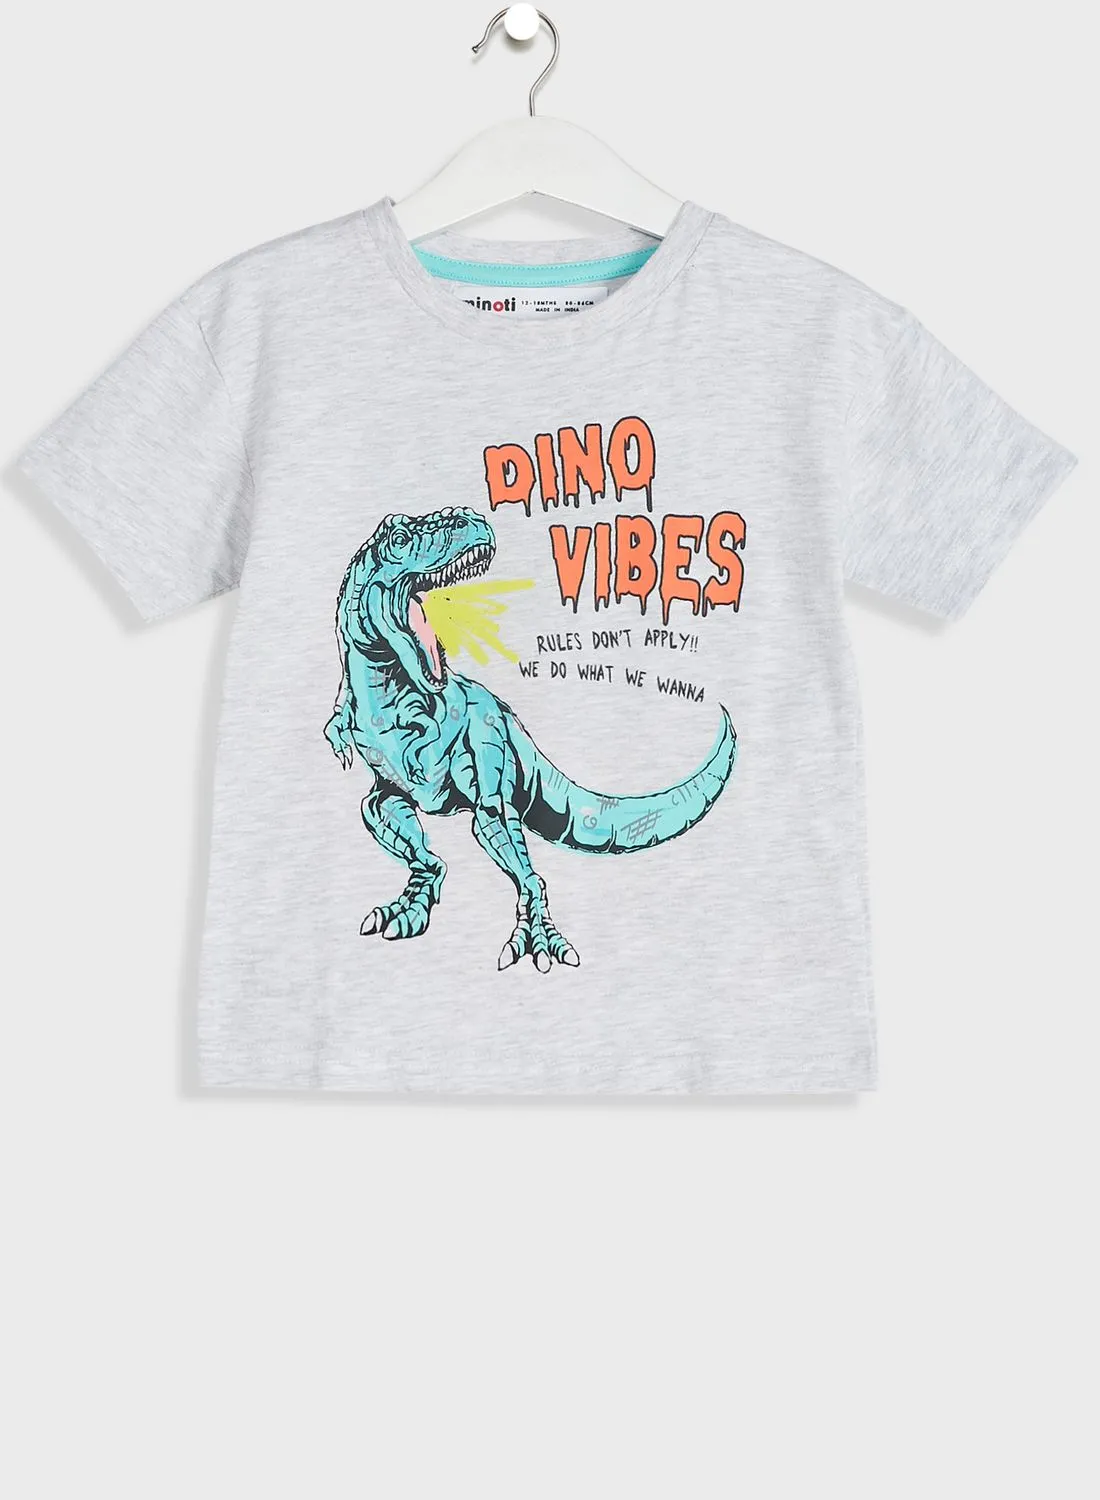 MINOTI Infant Graphic T-Shirt